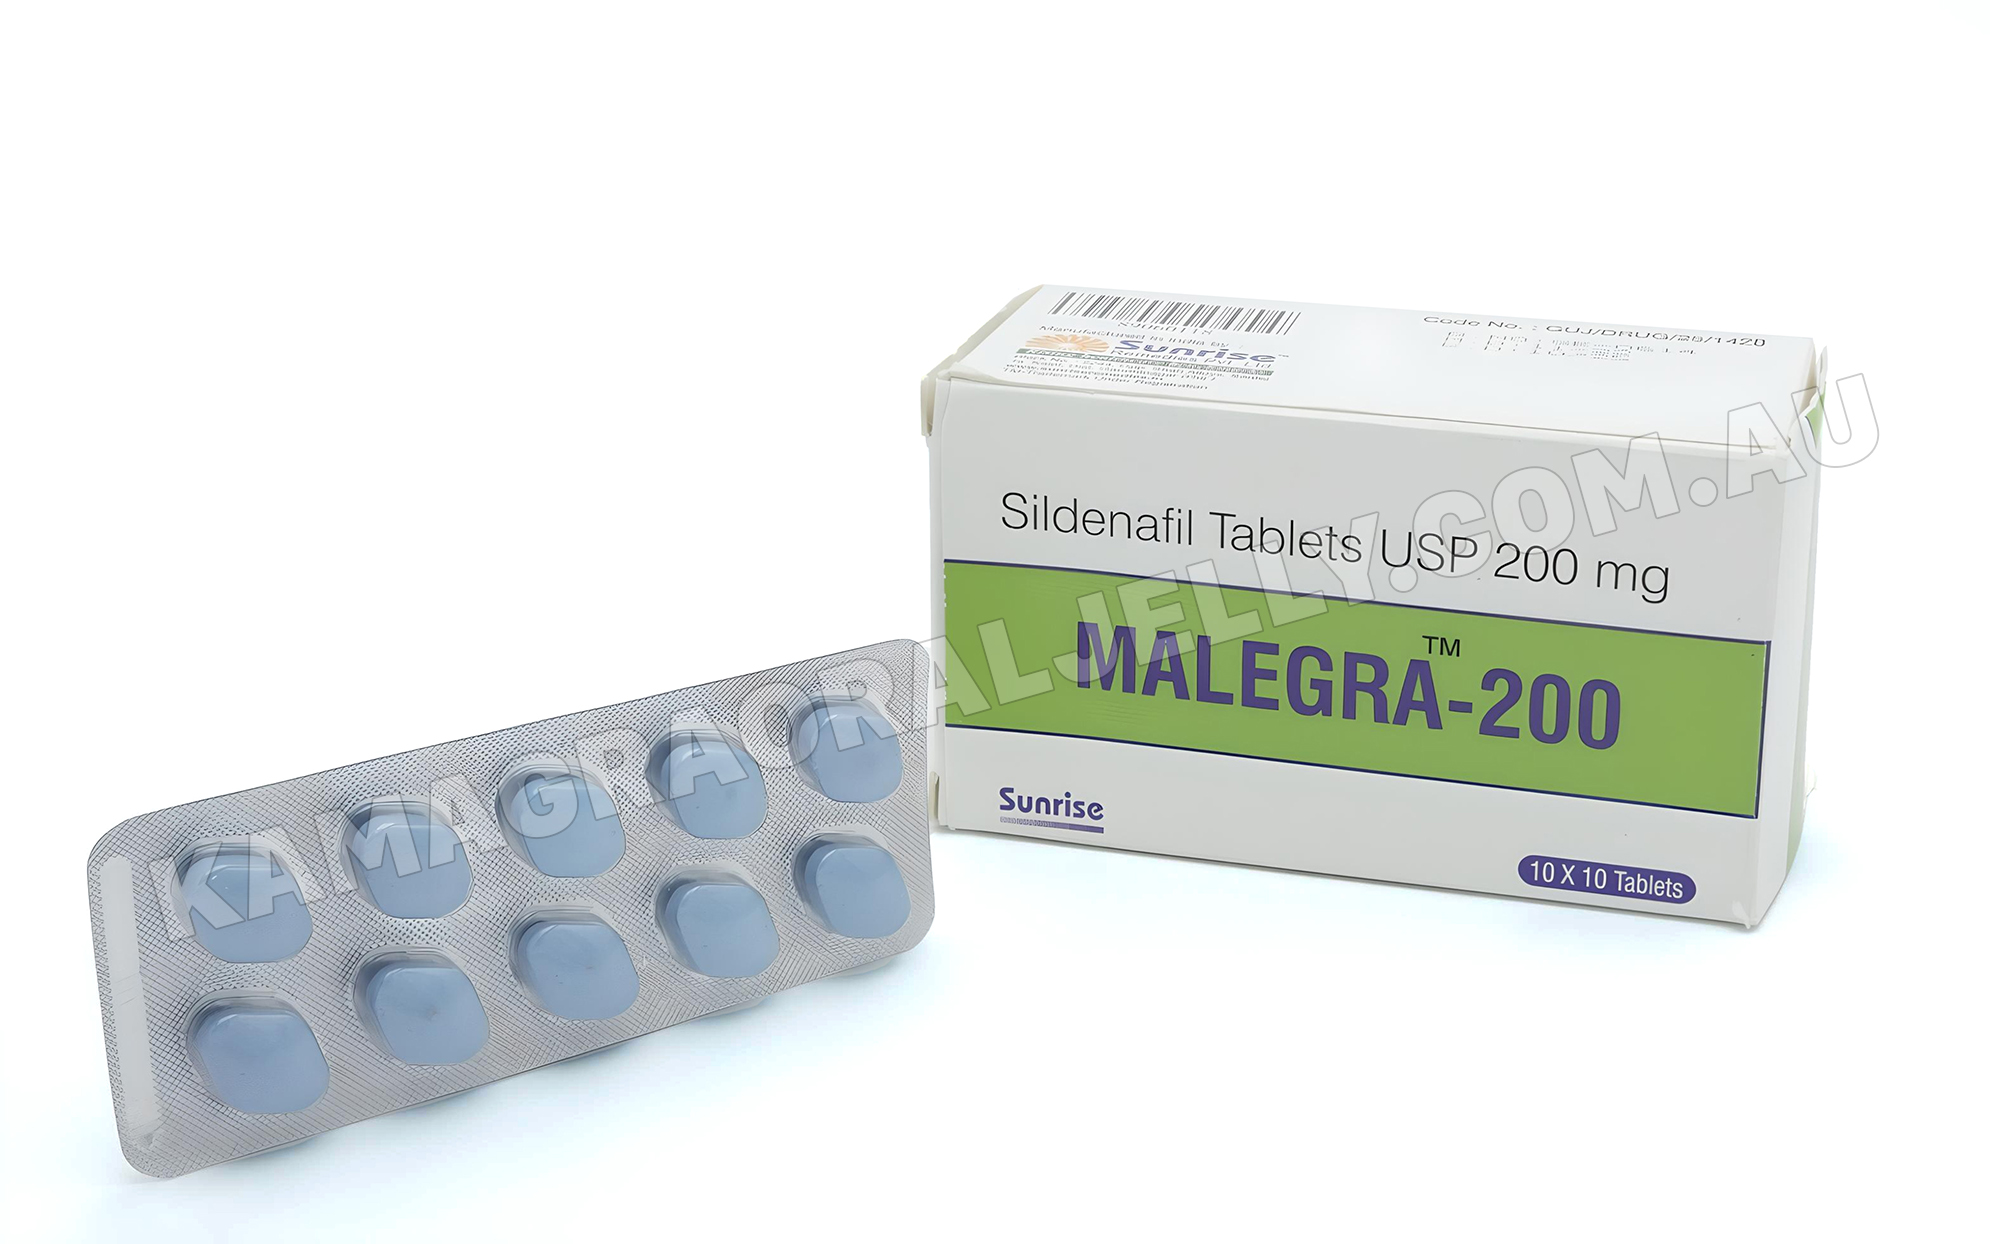 What is Malegra 200 mg?